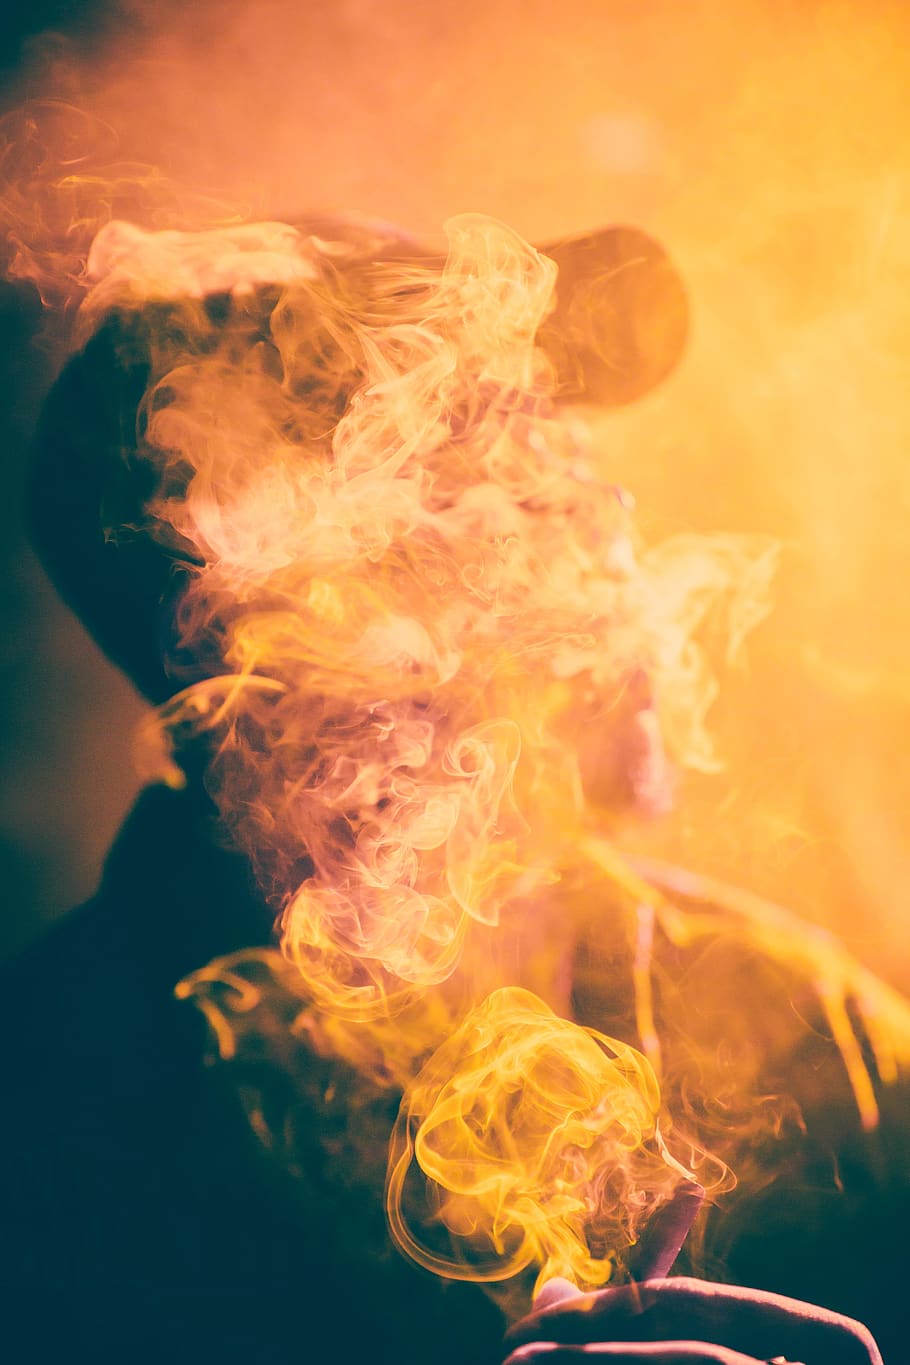 people, man, smoking, smoke, heat - temperature, burning, orange color, smoke - physical structure, close-up, fire